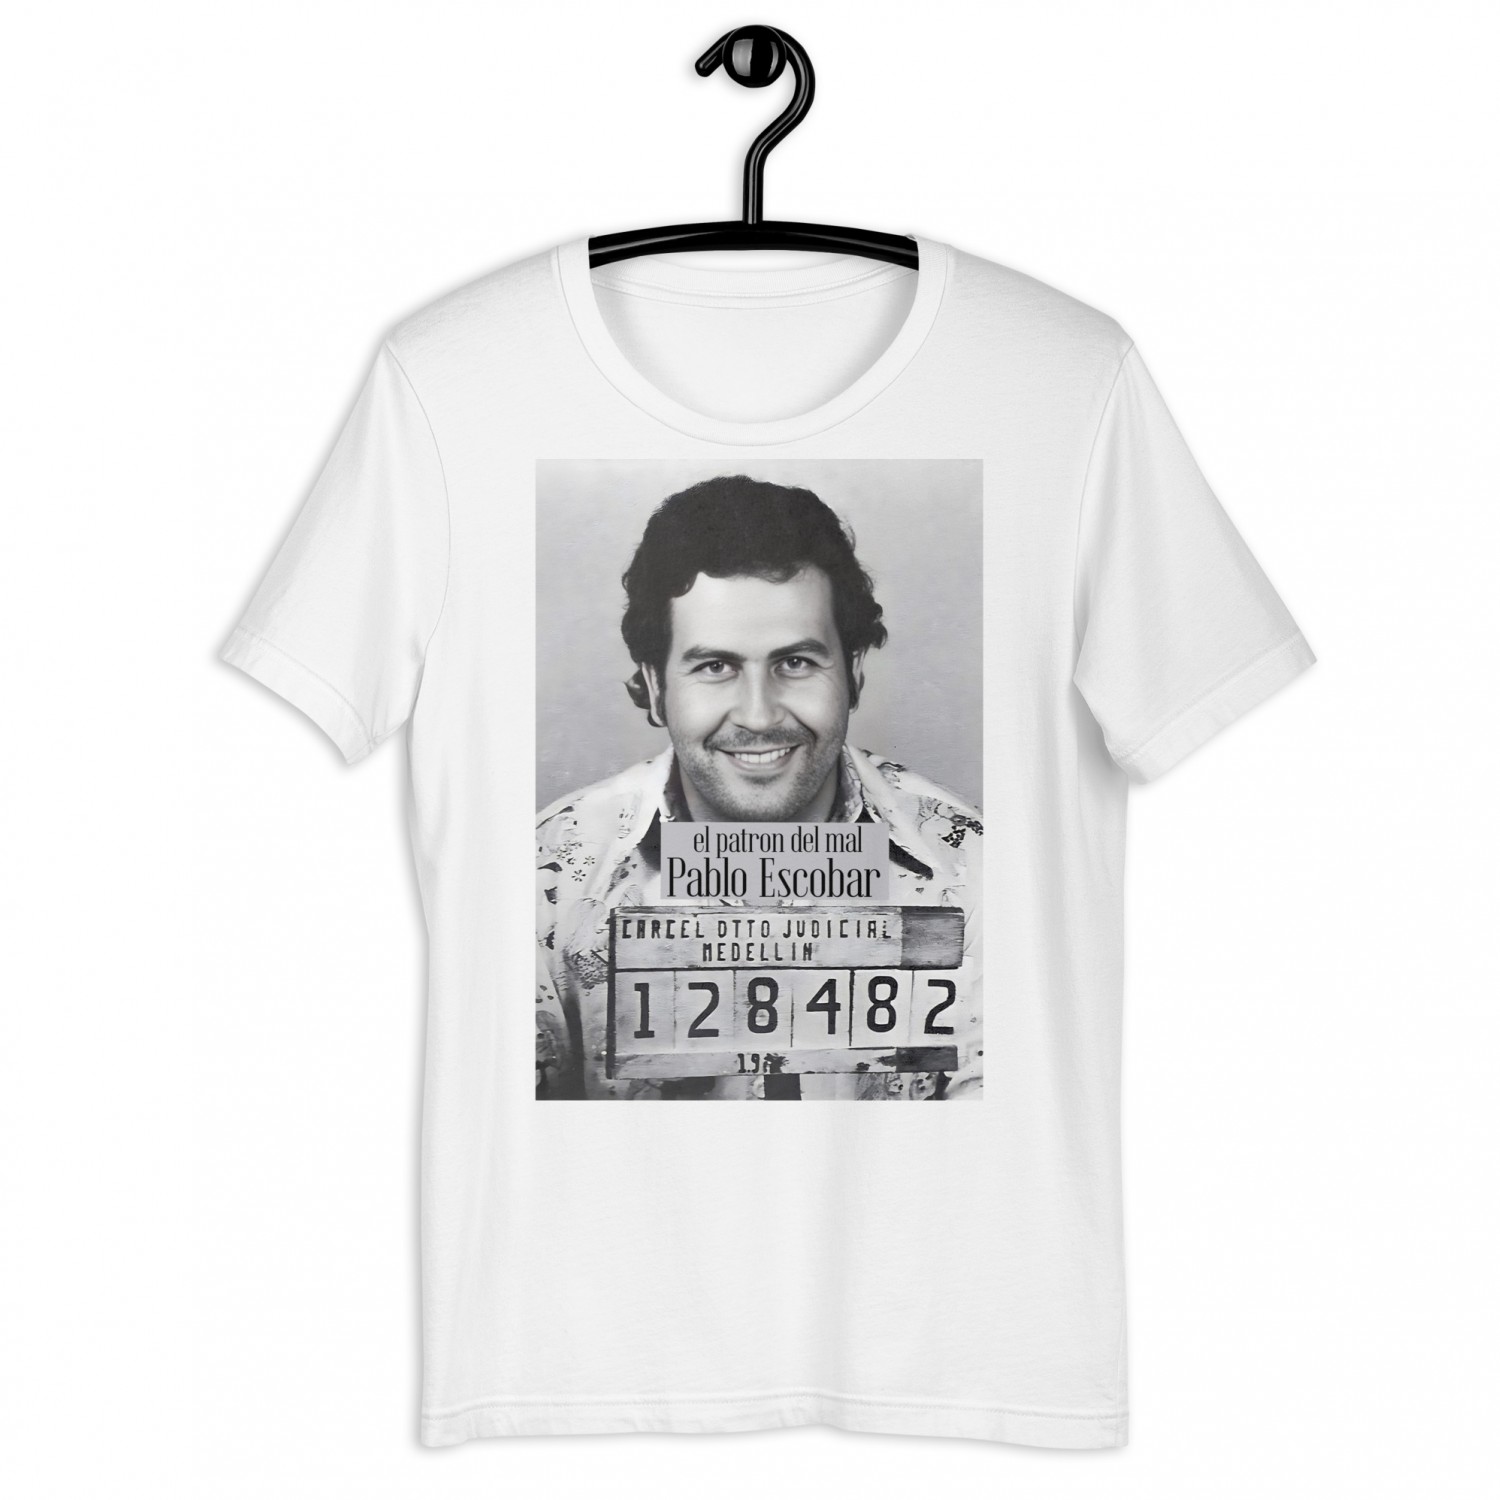 Kup koszulkę Pablo Escobara